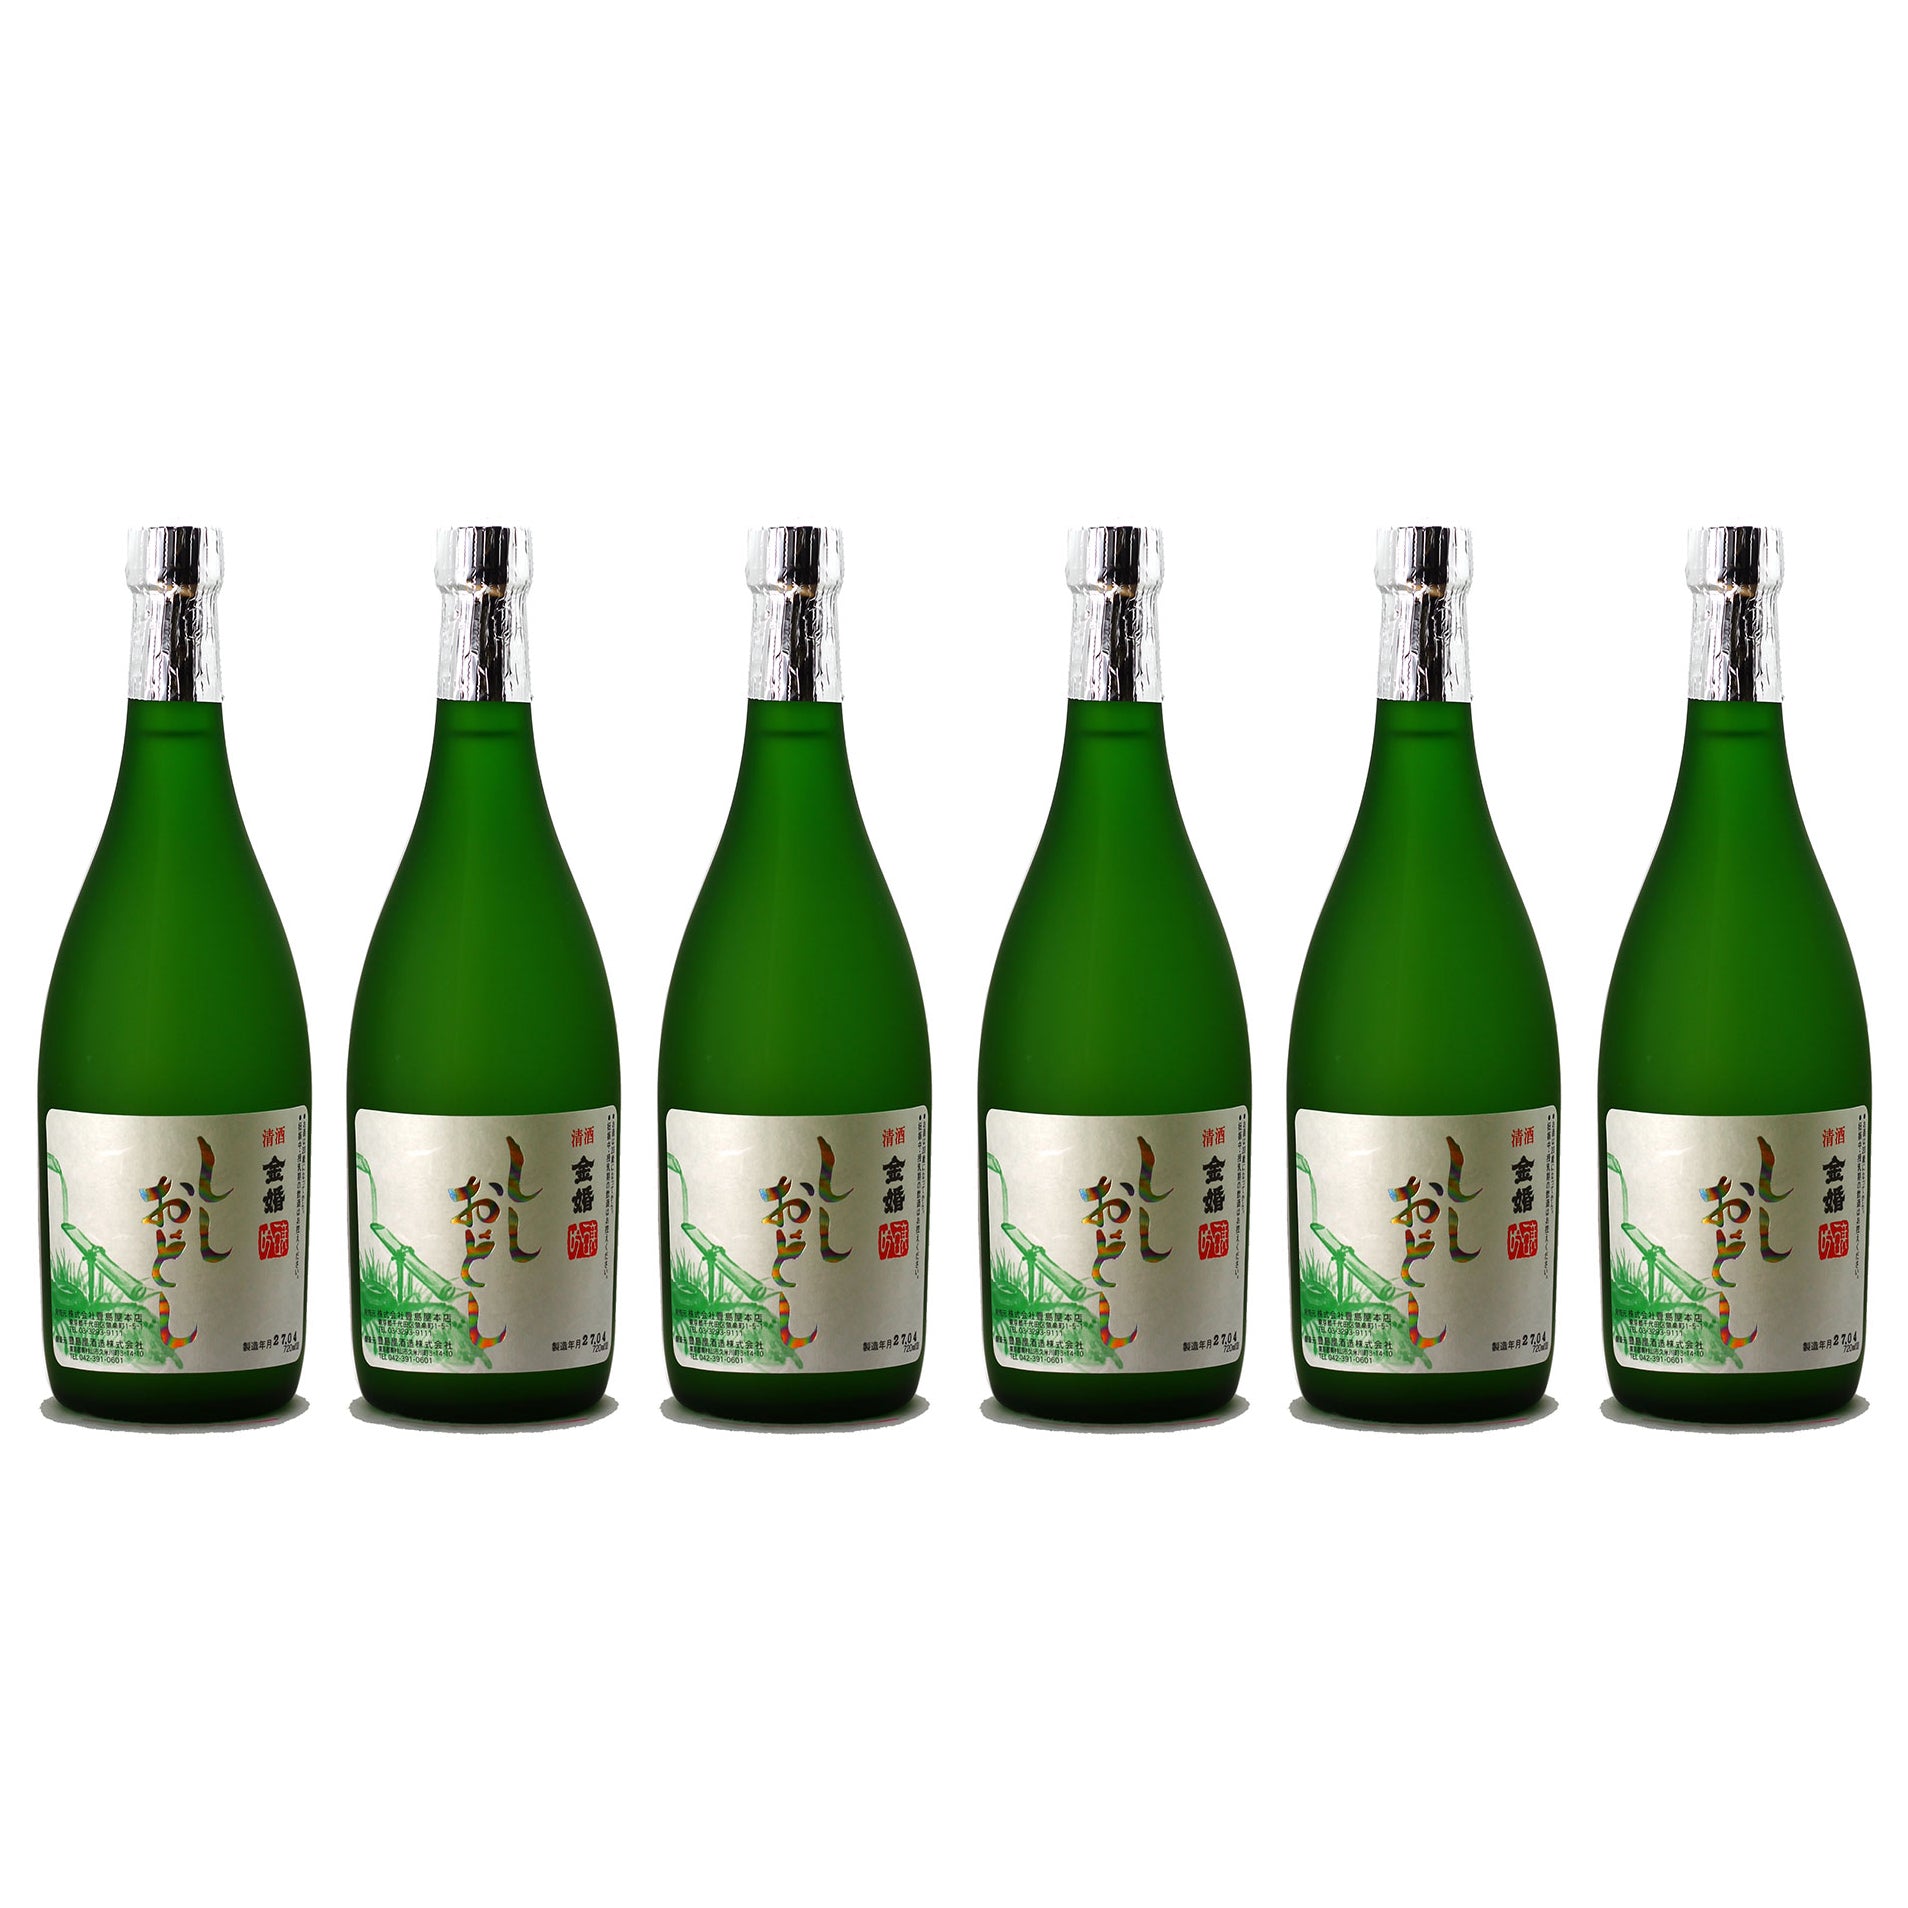 "Shishiodoshi" (720ml) x 6 Bottle Pack